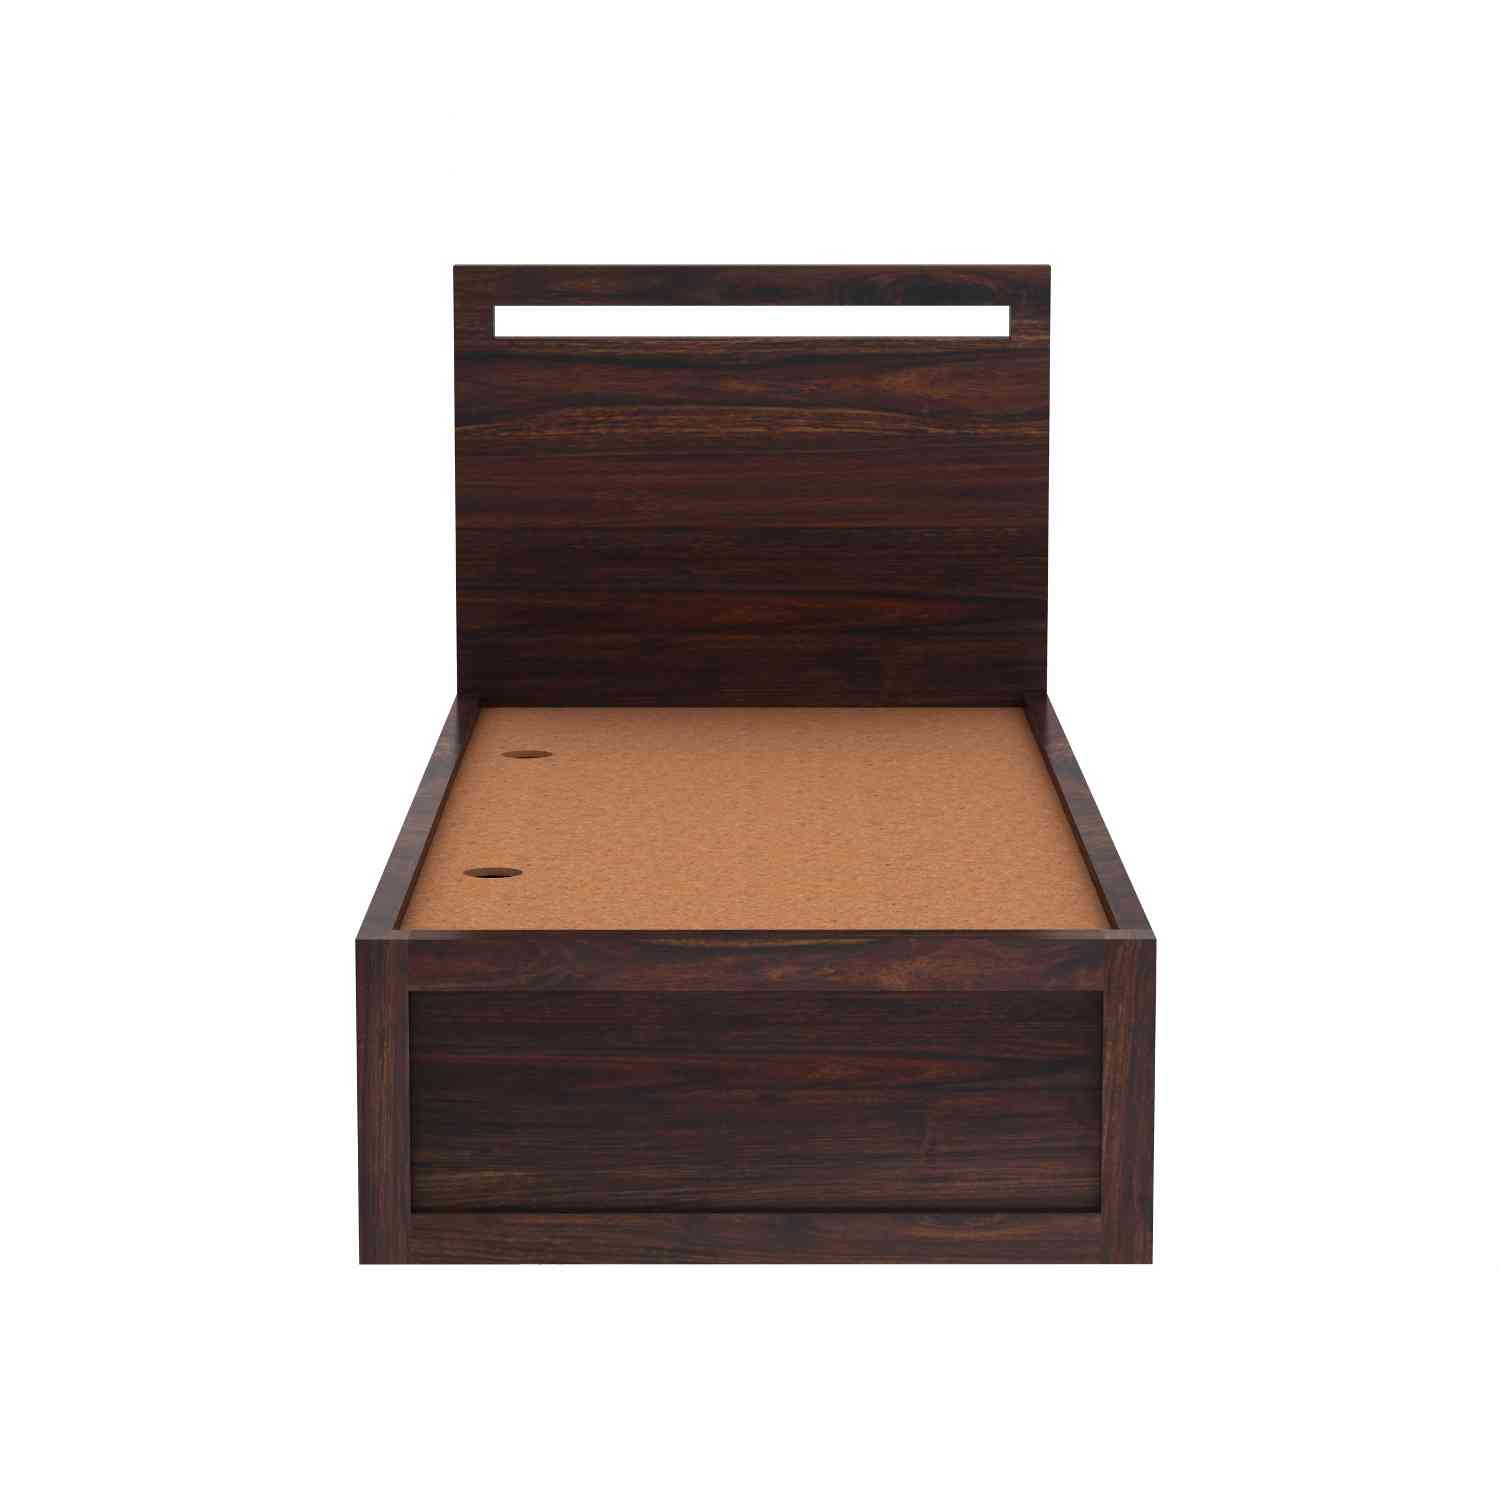 Livinn Solid Sheesham Wood Single Bed With Box Storage (Walnut Finish)